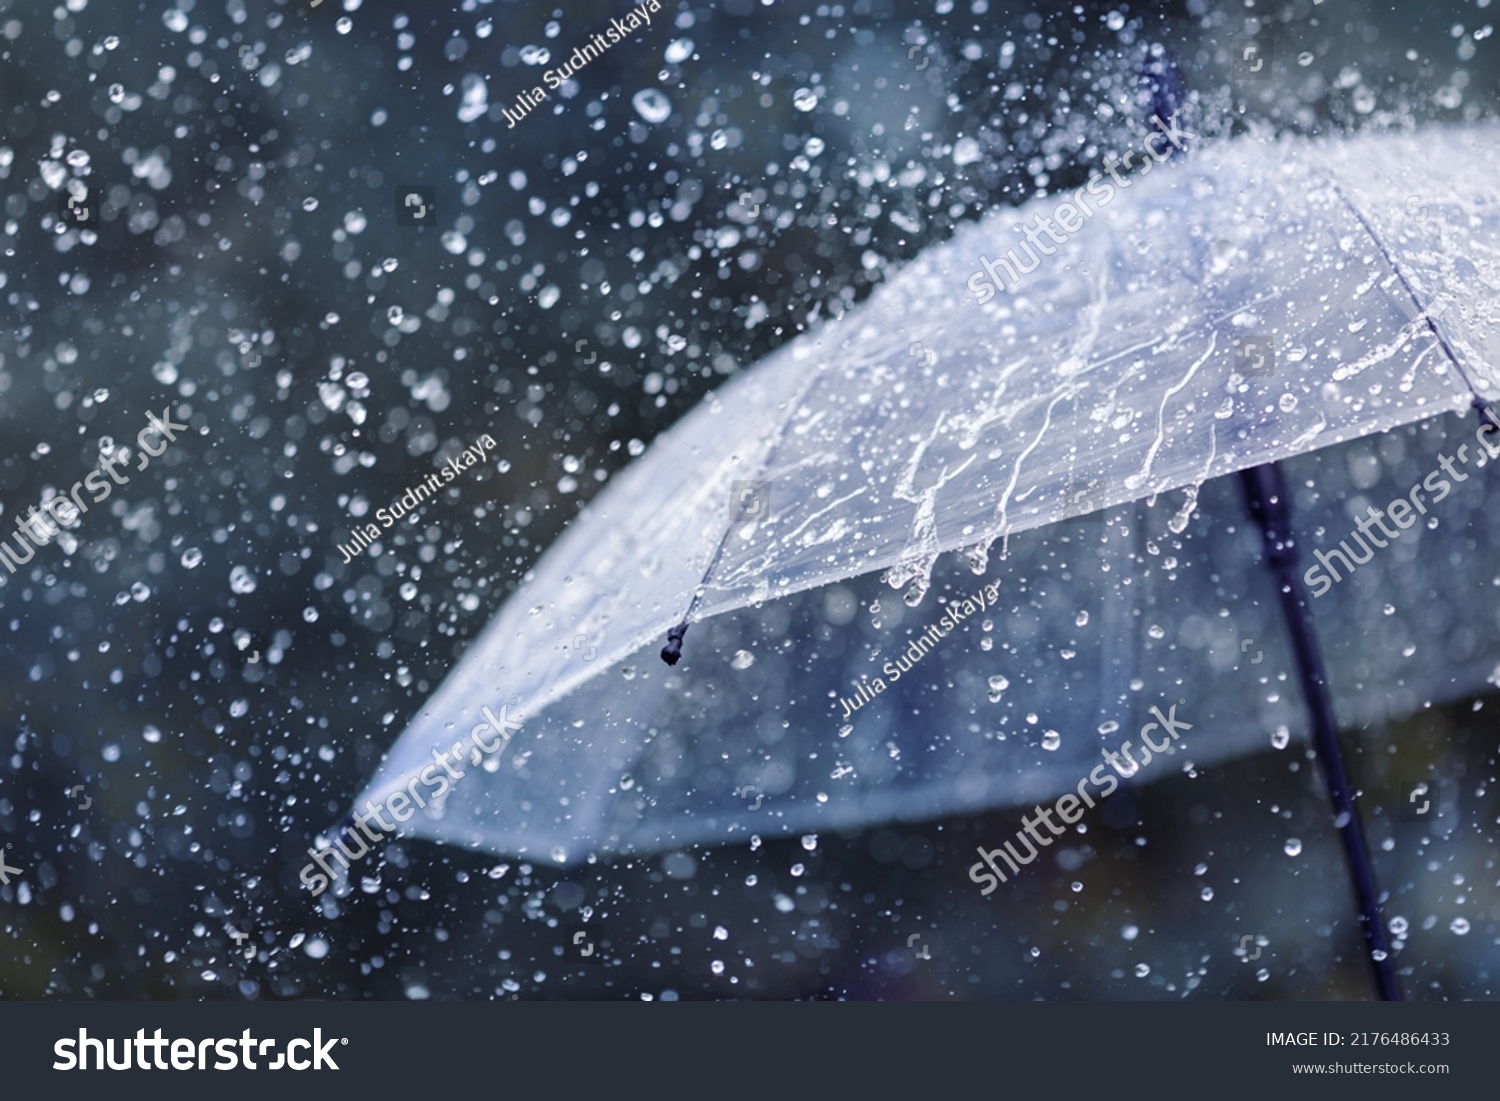 Transparent umbrella under heavy rain against water drops splash background. Rainy weather concept. #2176486433